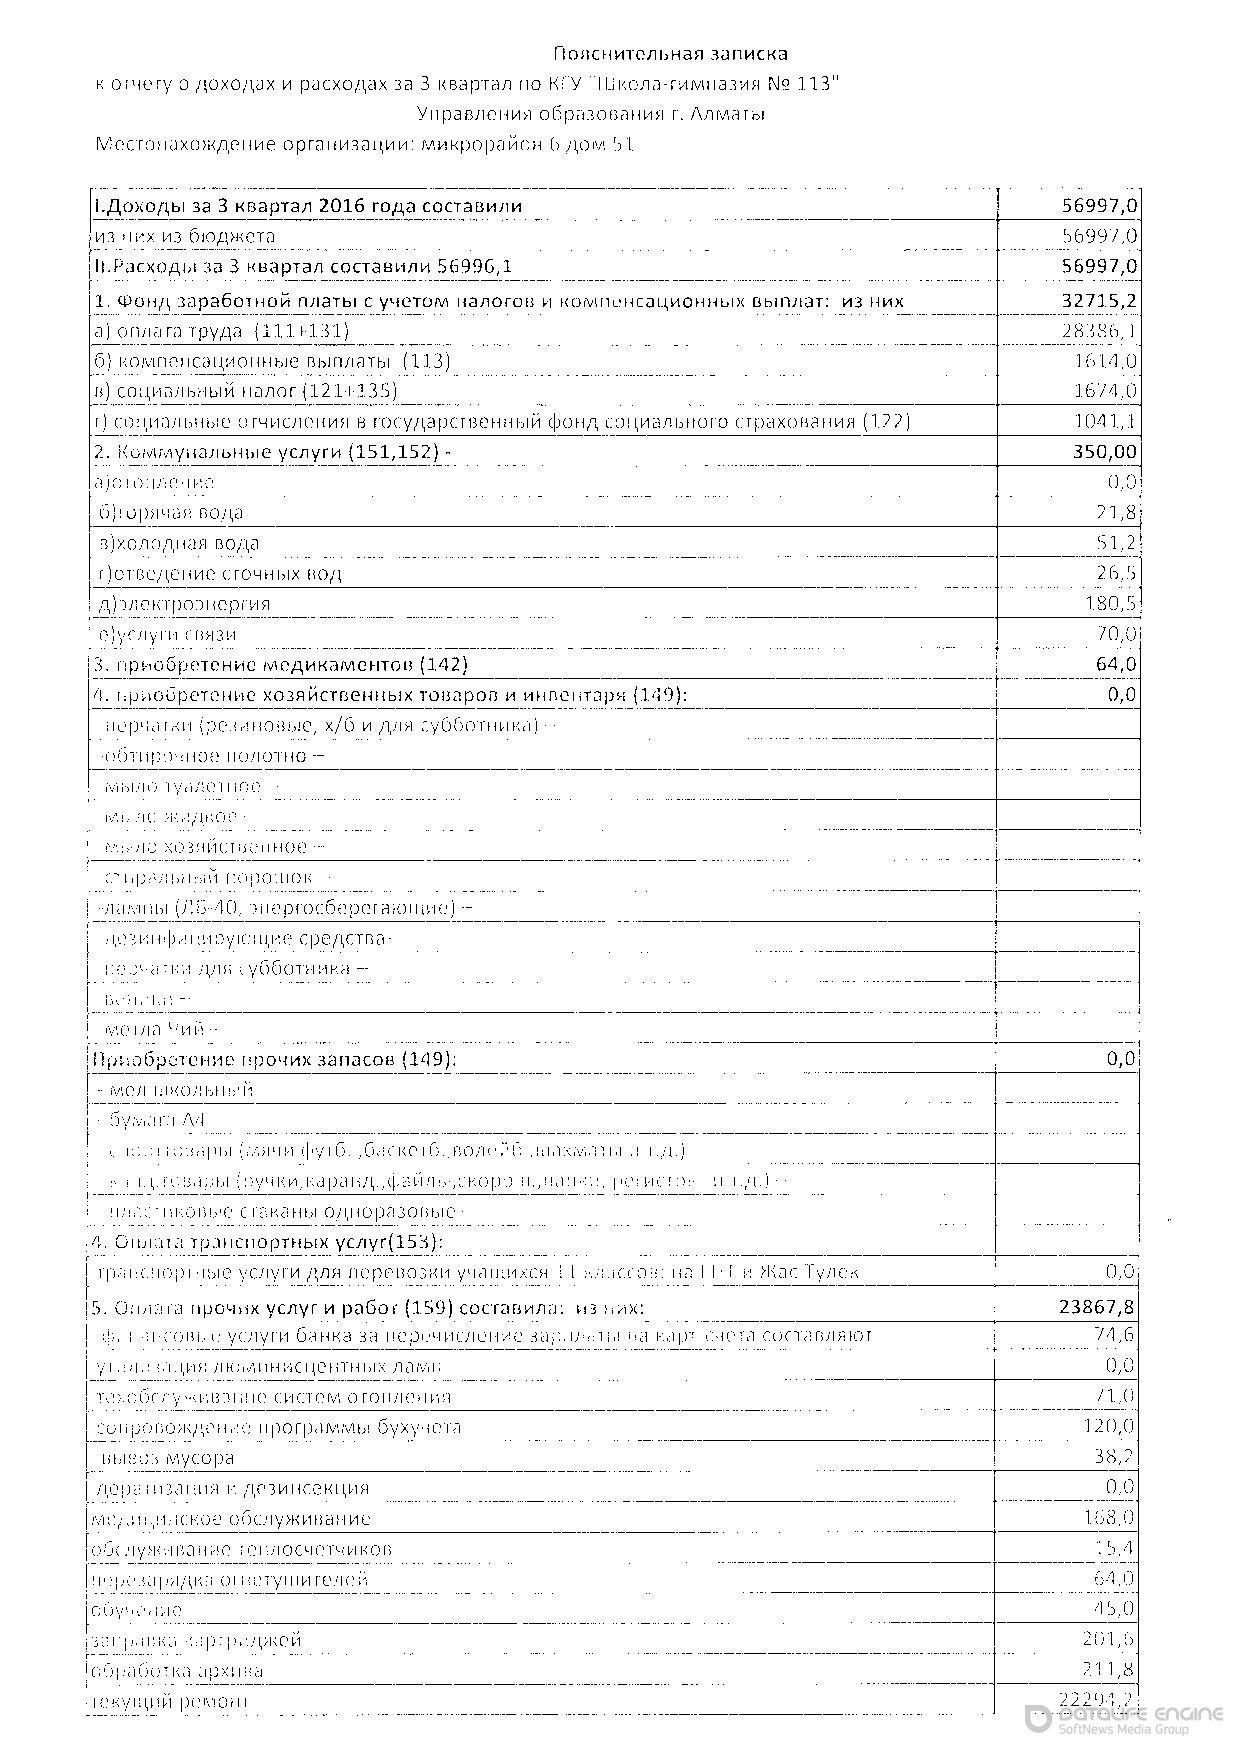 Отчет о доходах III квартал 2016